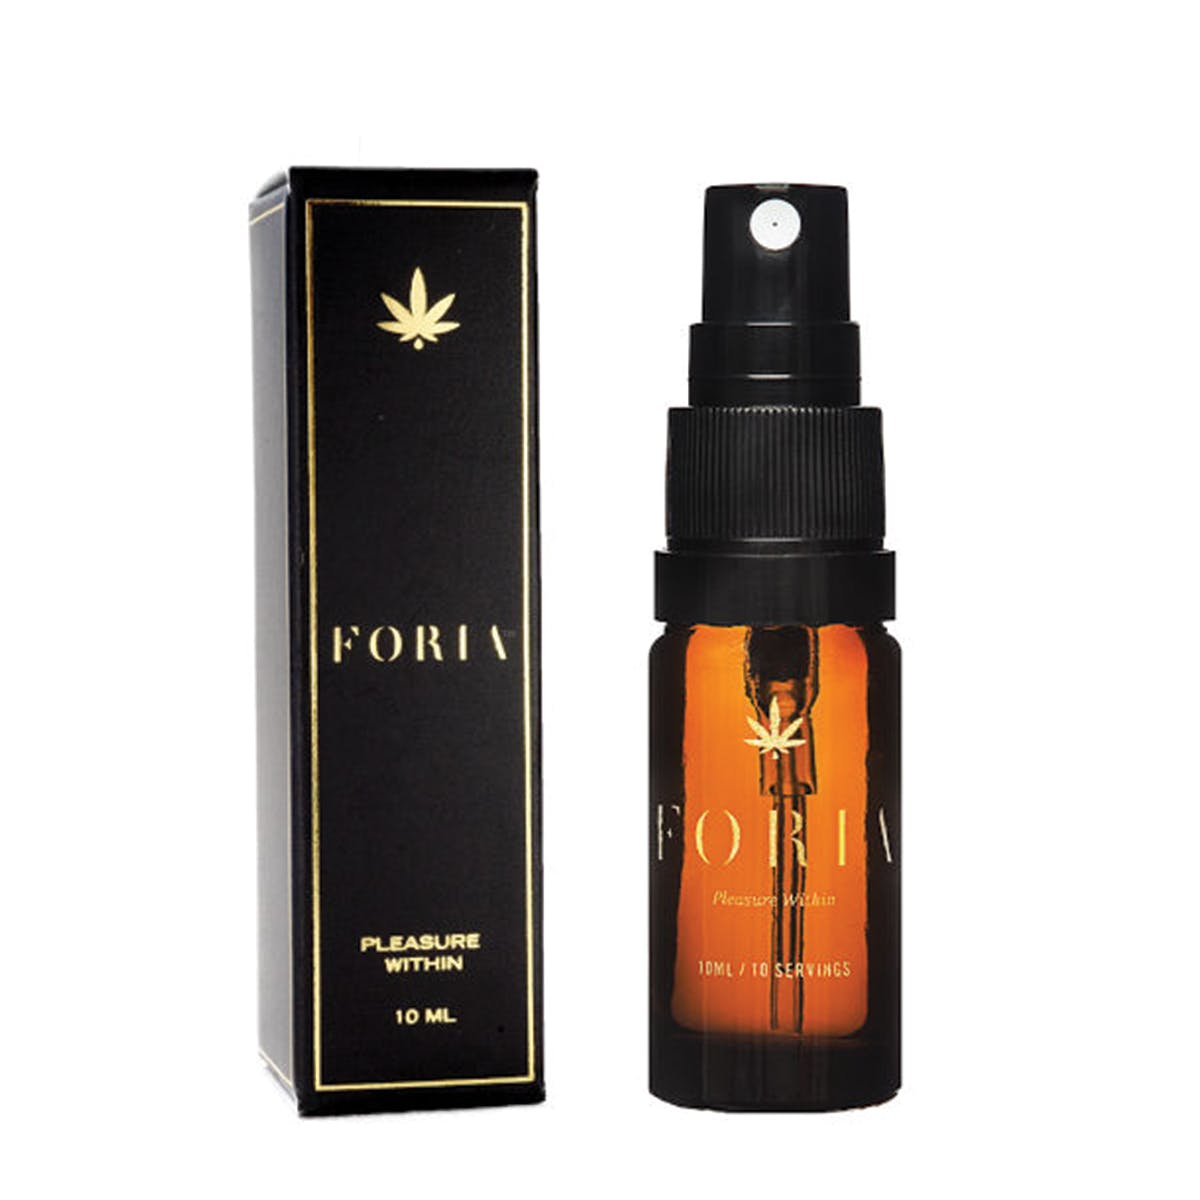 marijuana-dispensaries-whole-meds-in-denver-foria-pleasure-10ml-spray-bottle